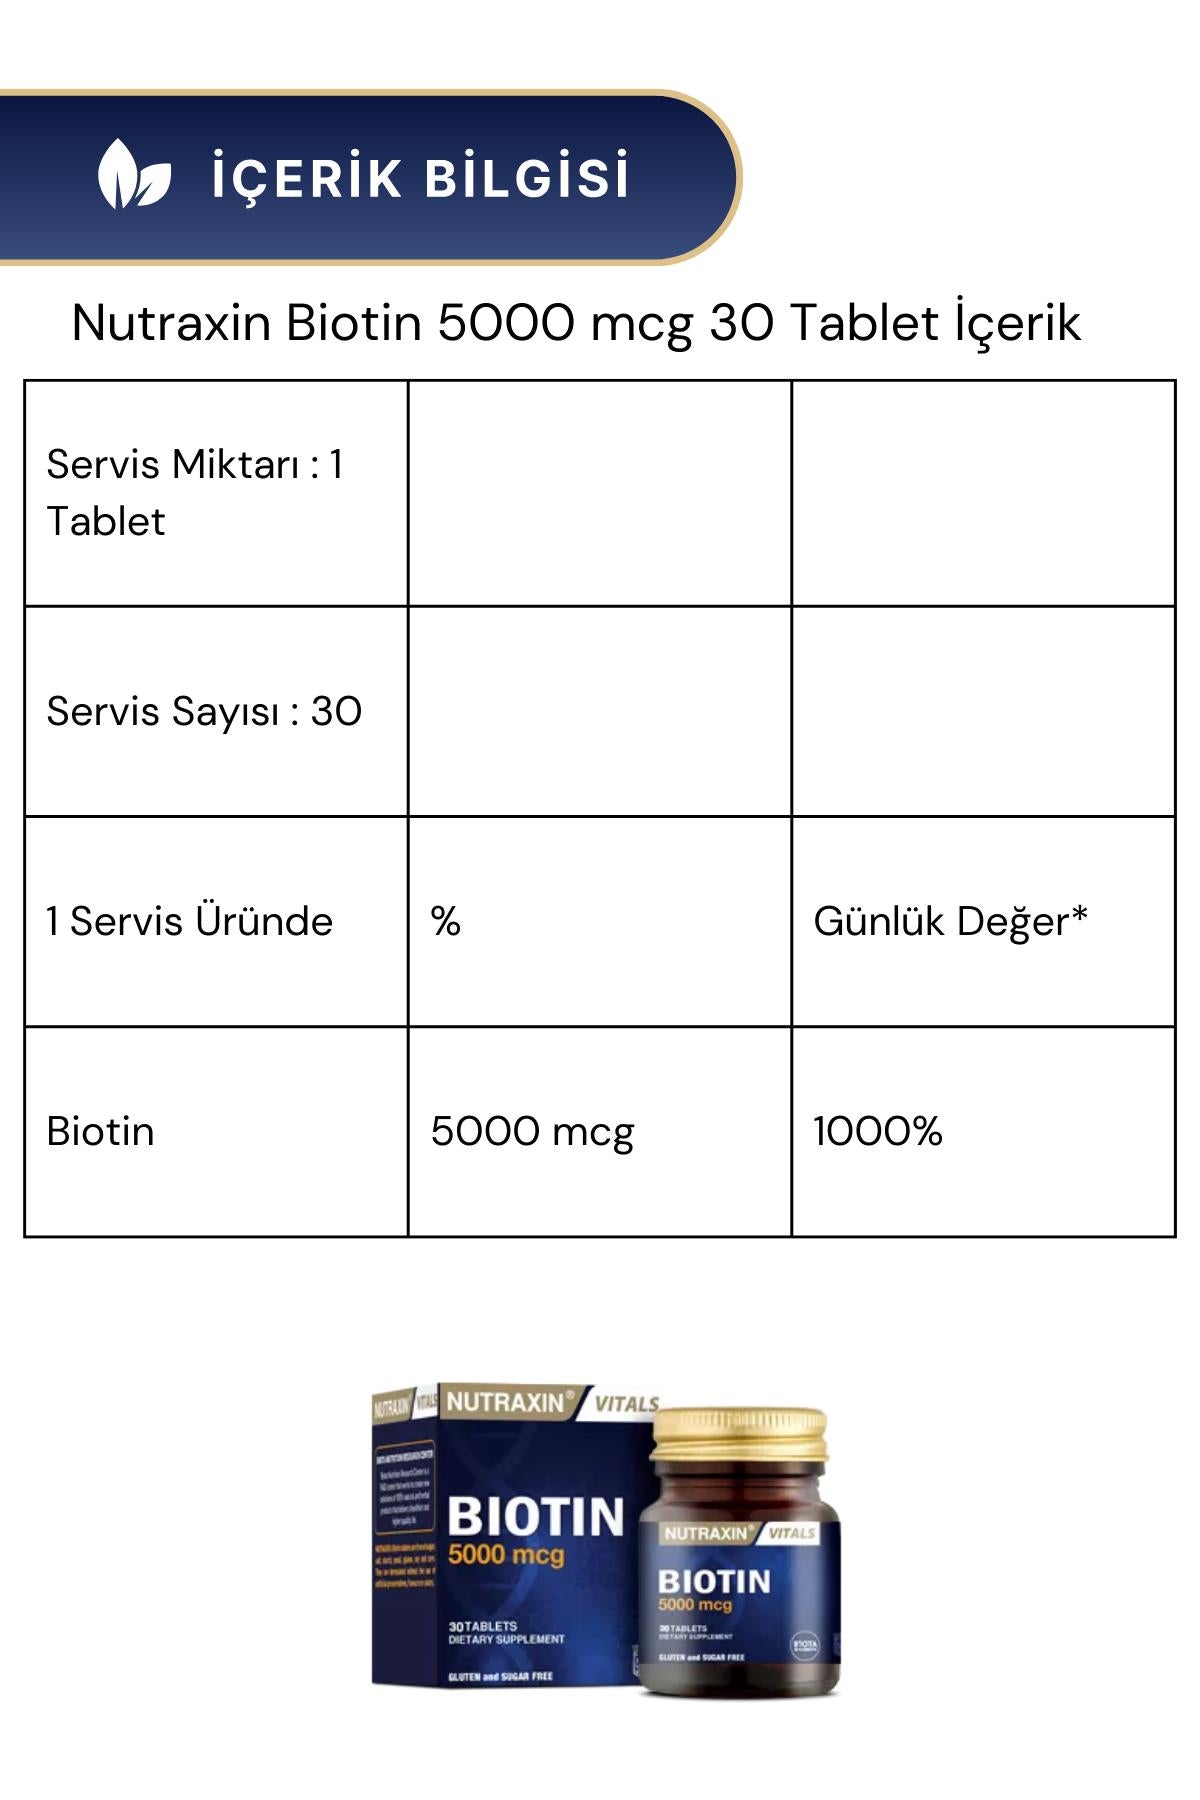 Nutraxin Biotin 5000 mcg 30 Tablet & Vitamin D3 1000 IU 120 Tablet